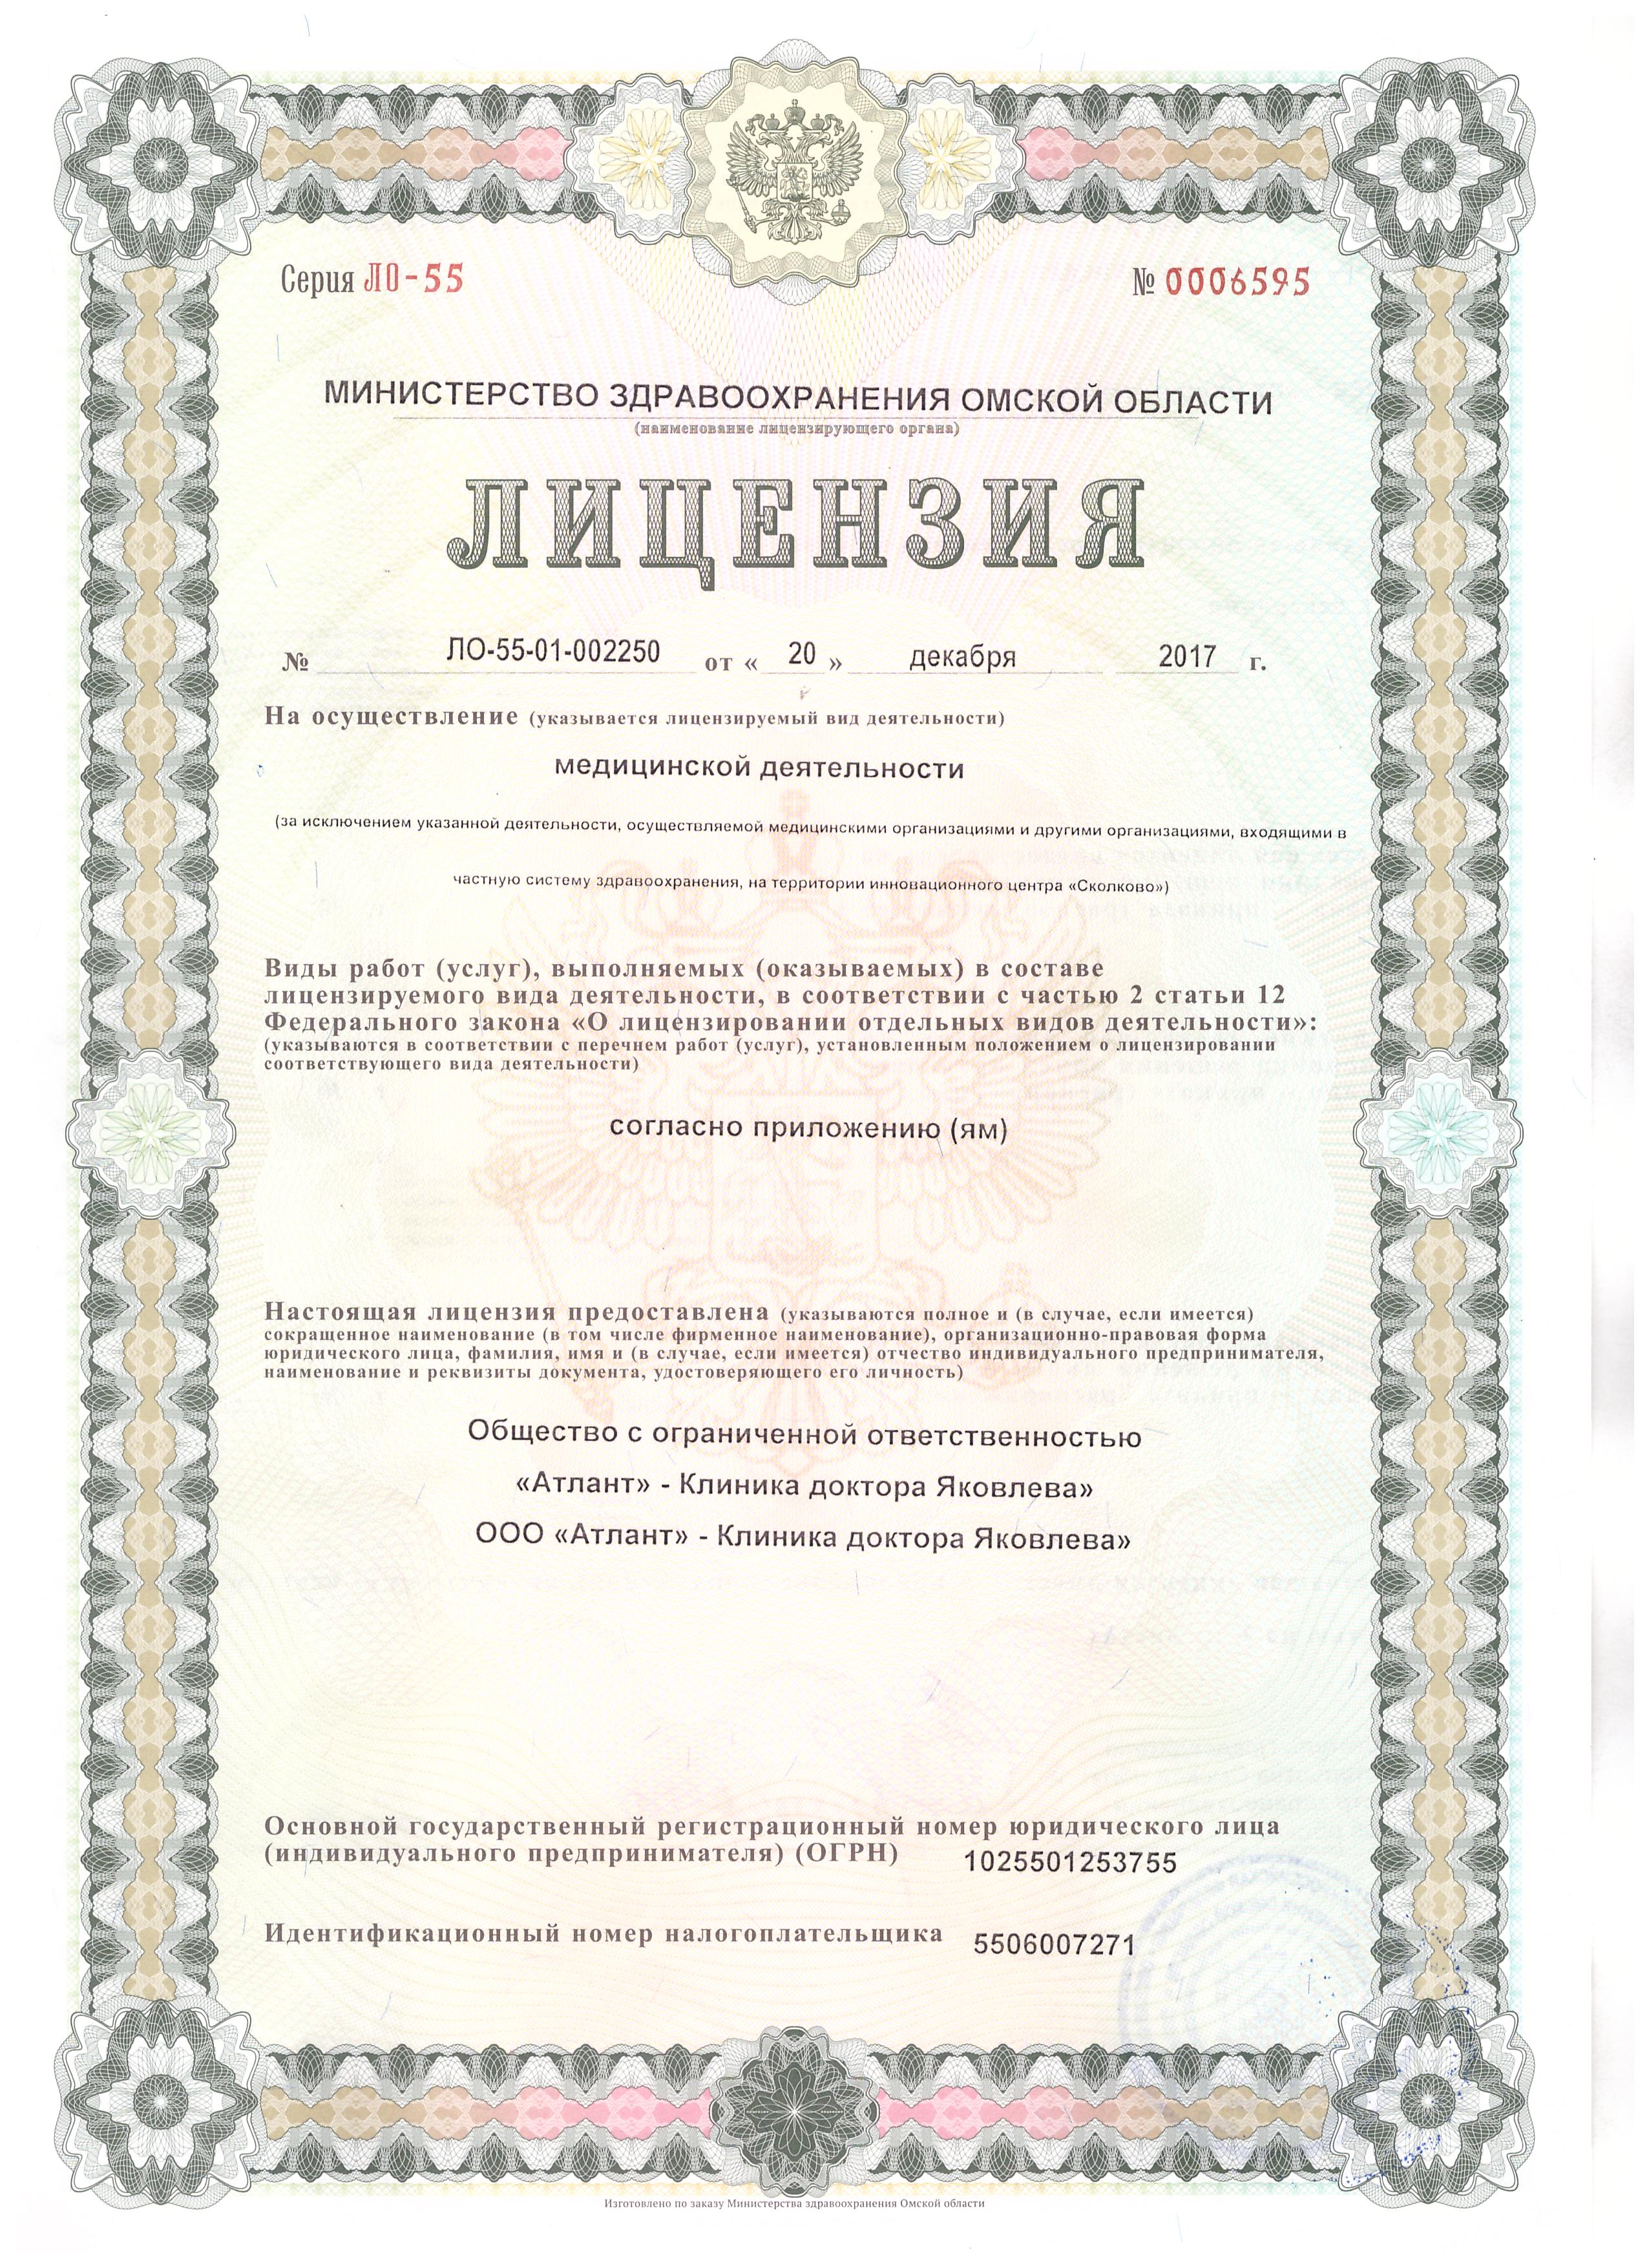 Лицензия клиники Яковлева 